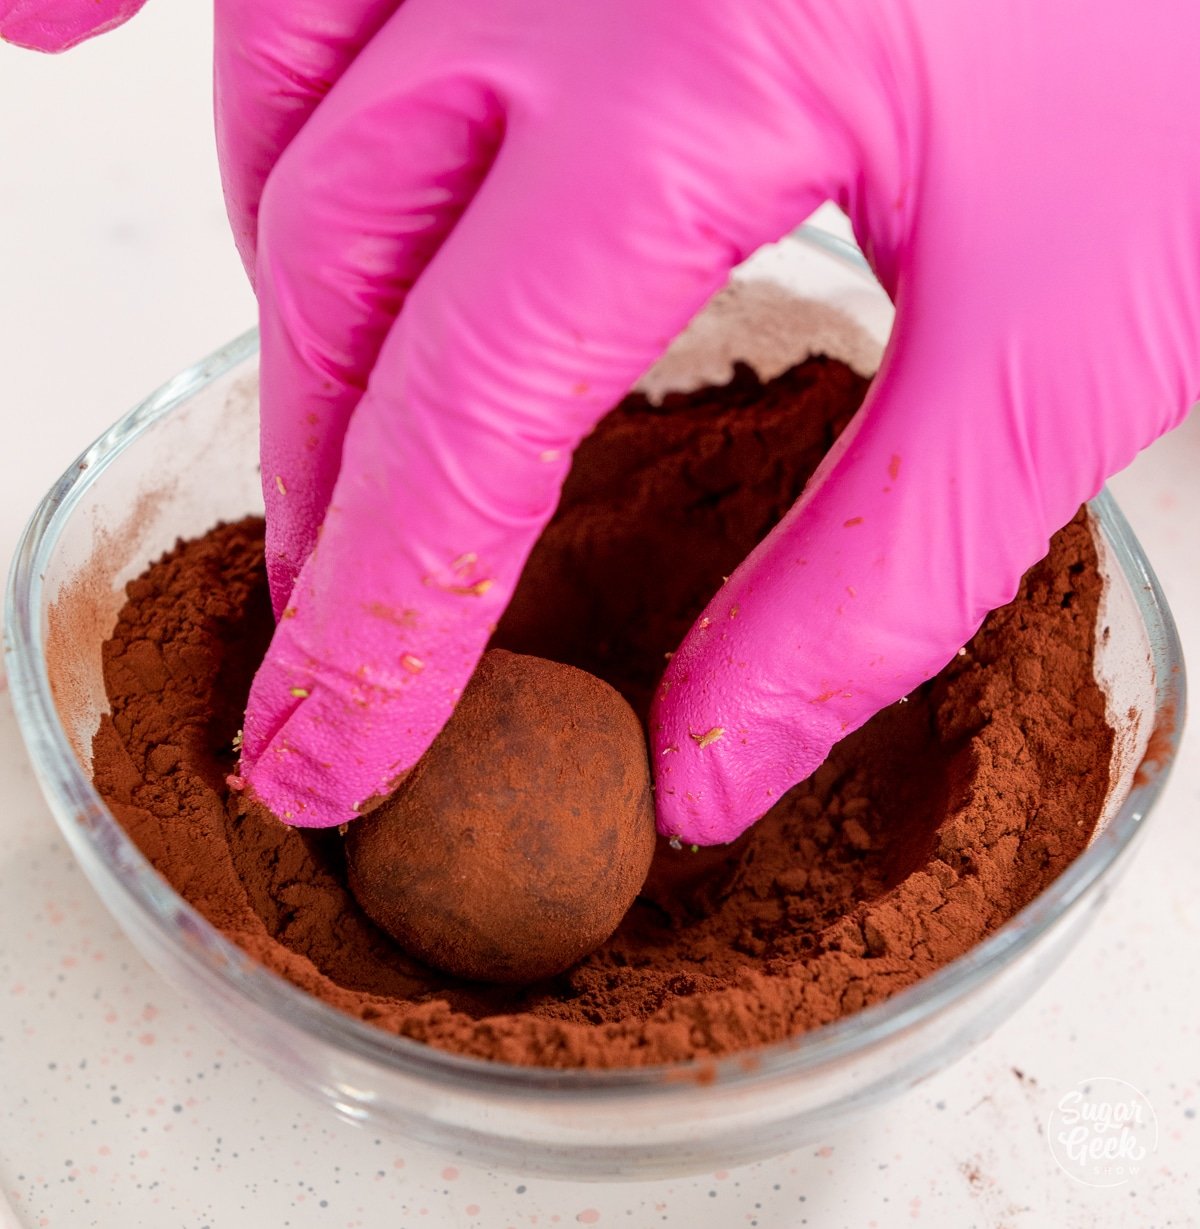 gloved hand rolling a ganache truffle in cocoa powder